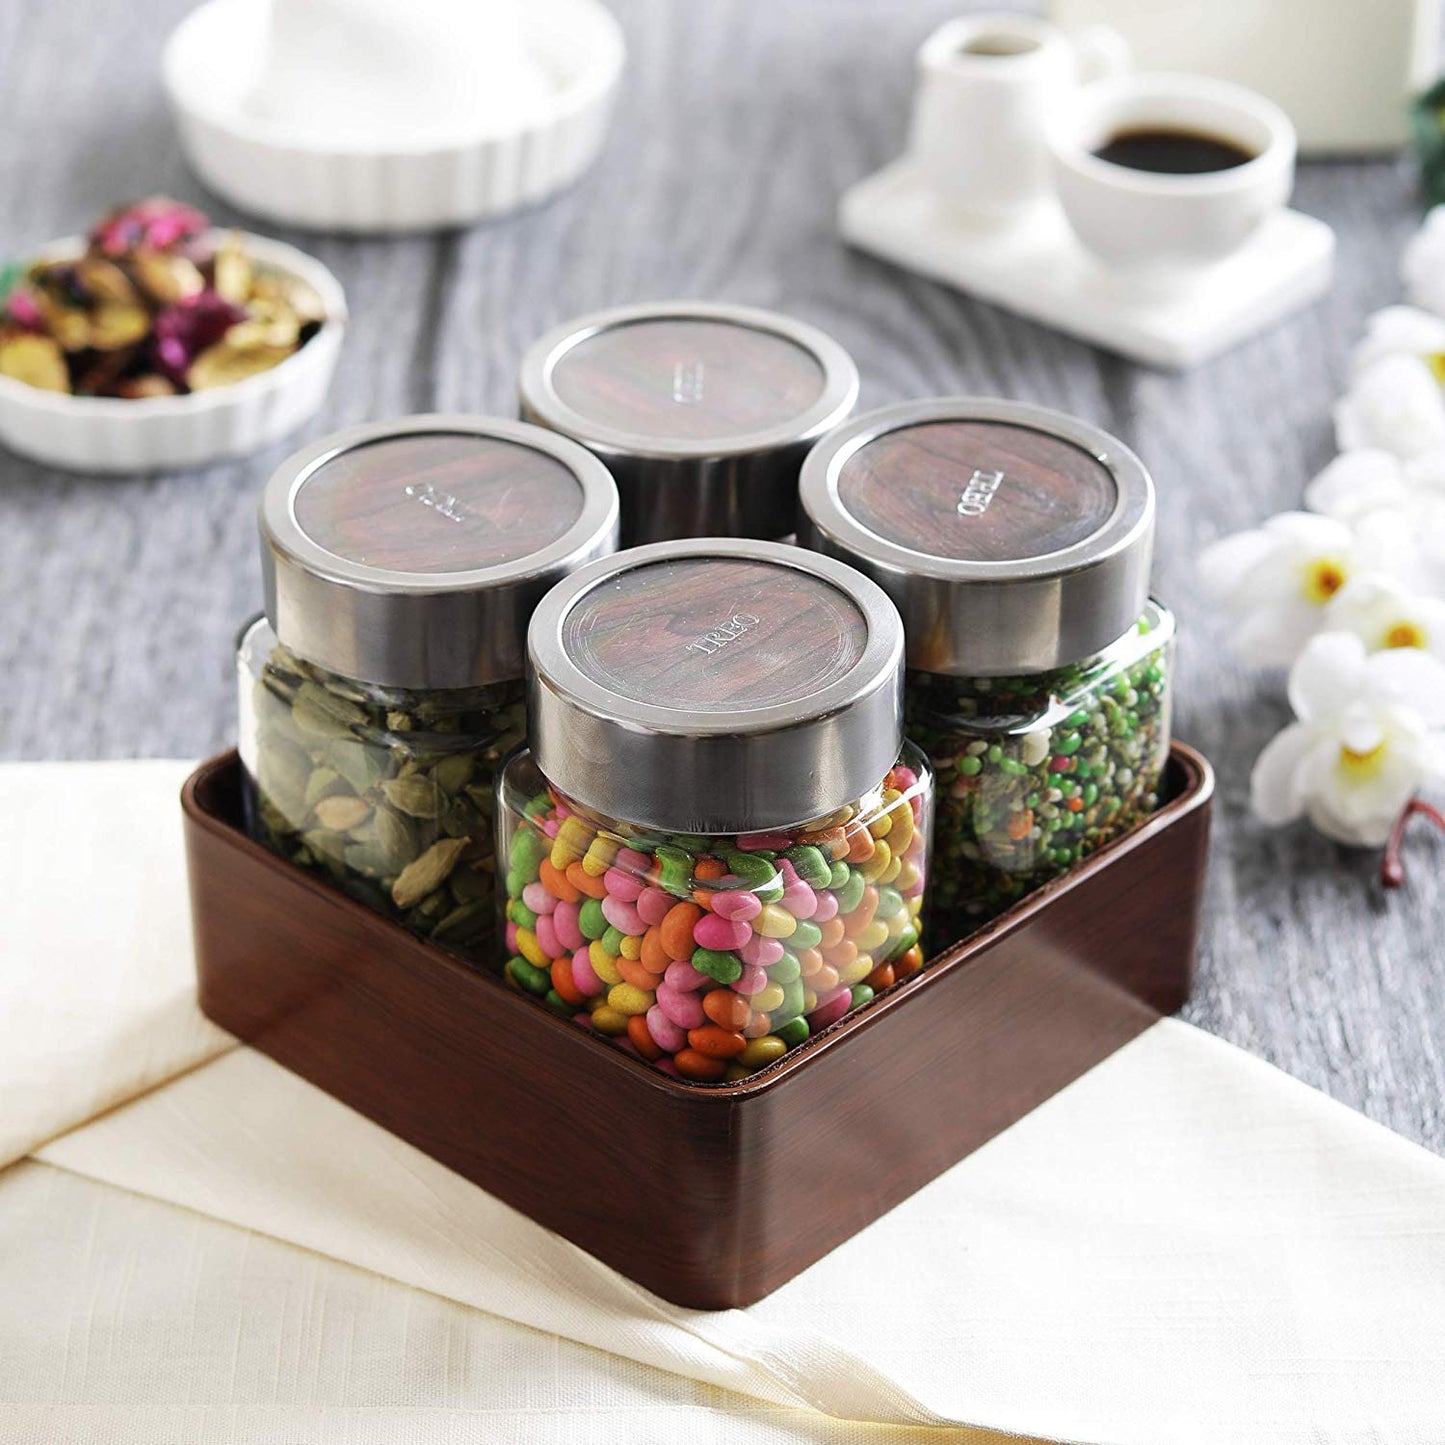 JVS Counter Organiser Treo Jars Walnut, 310 ml , Multicolour, 4 jars-1 stand | Jars & Containers